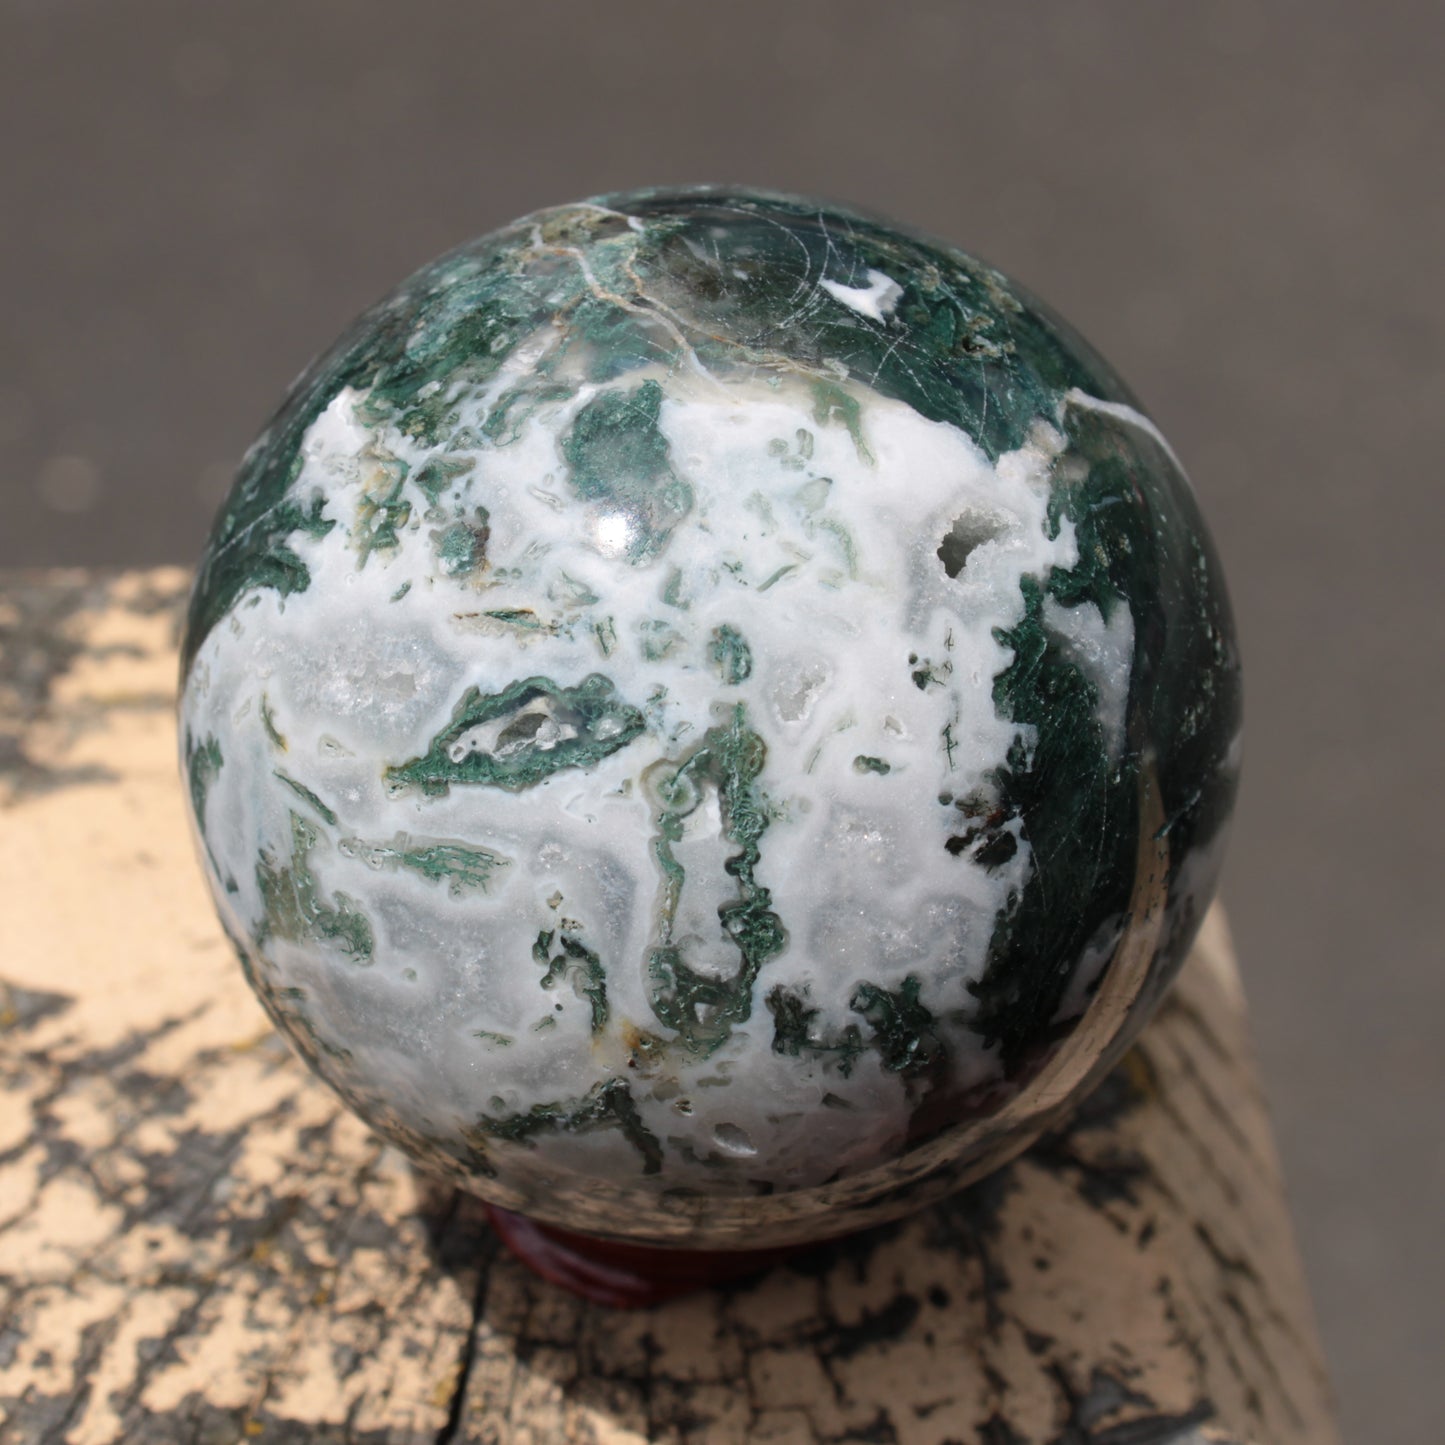 Moss Agate sphere 414g